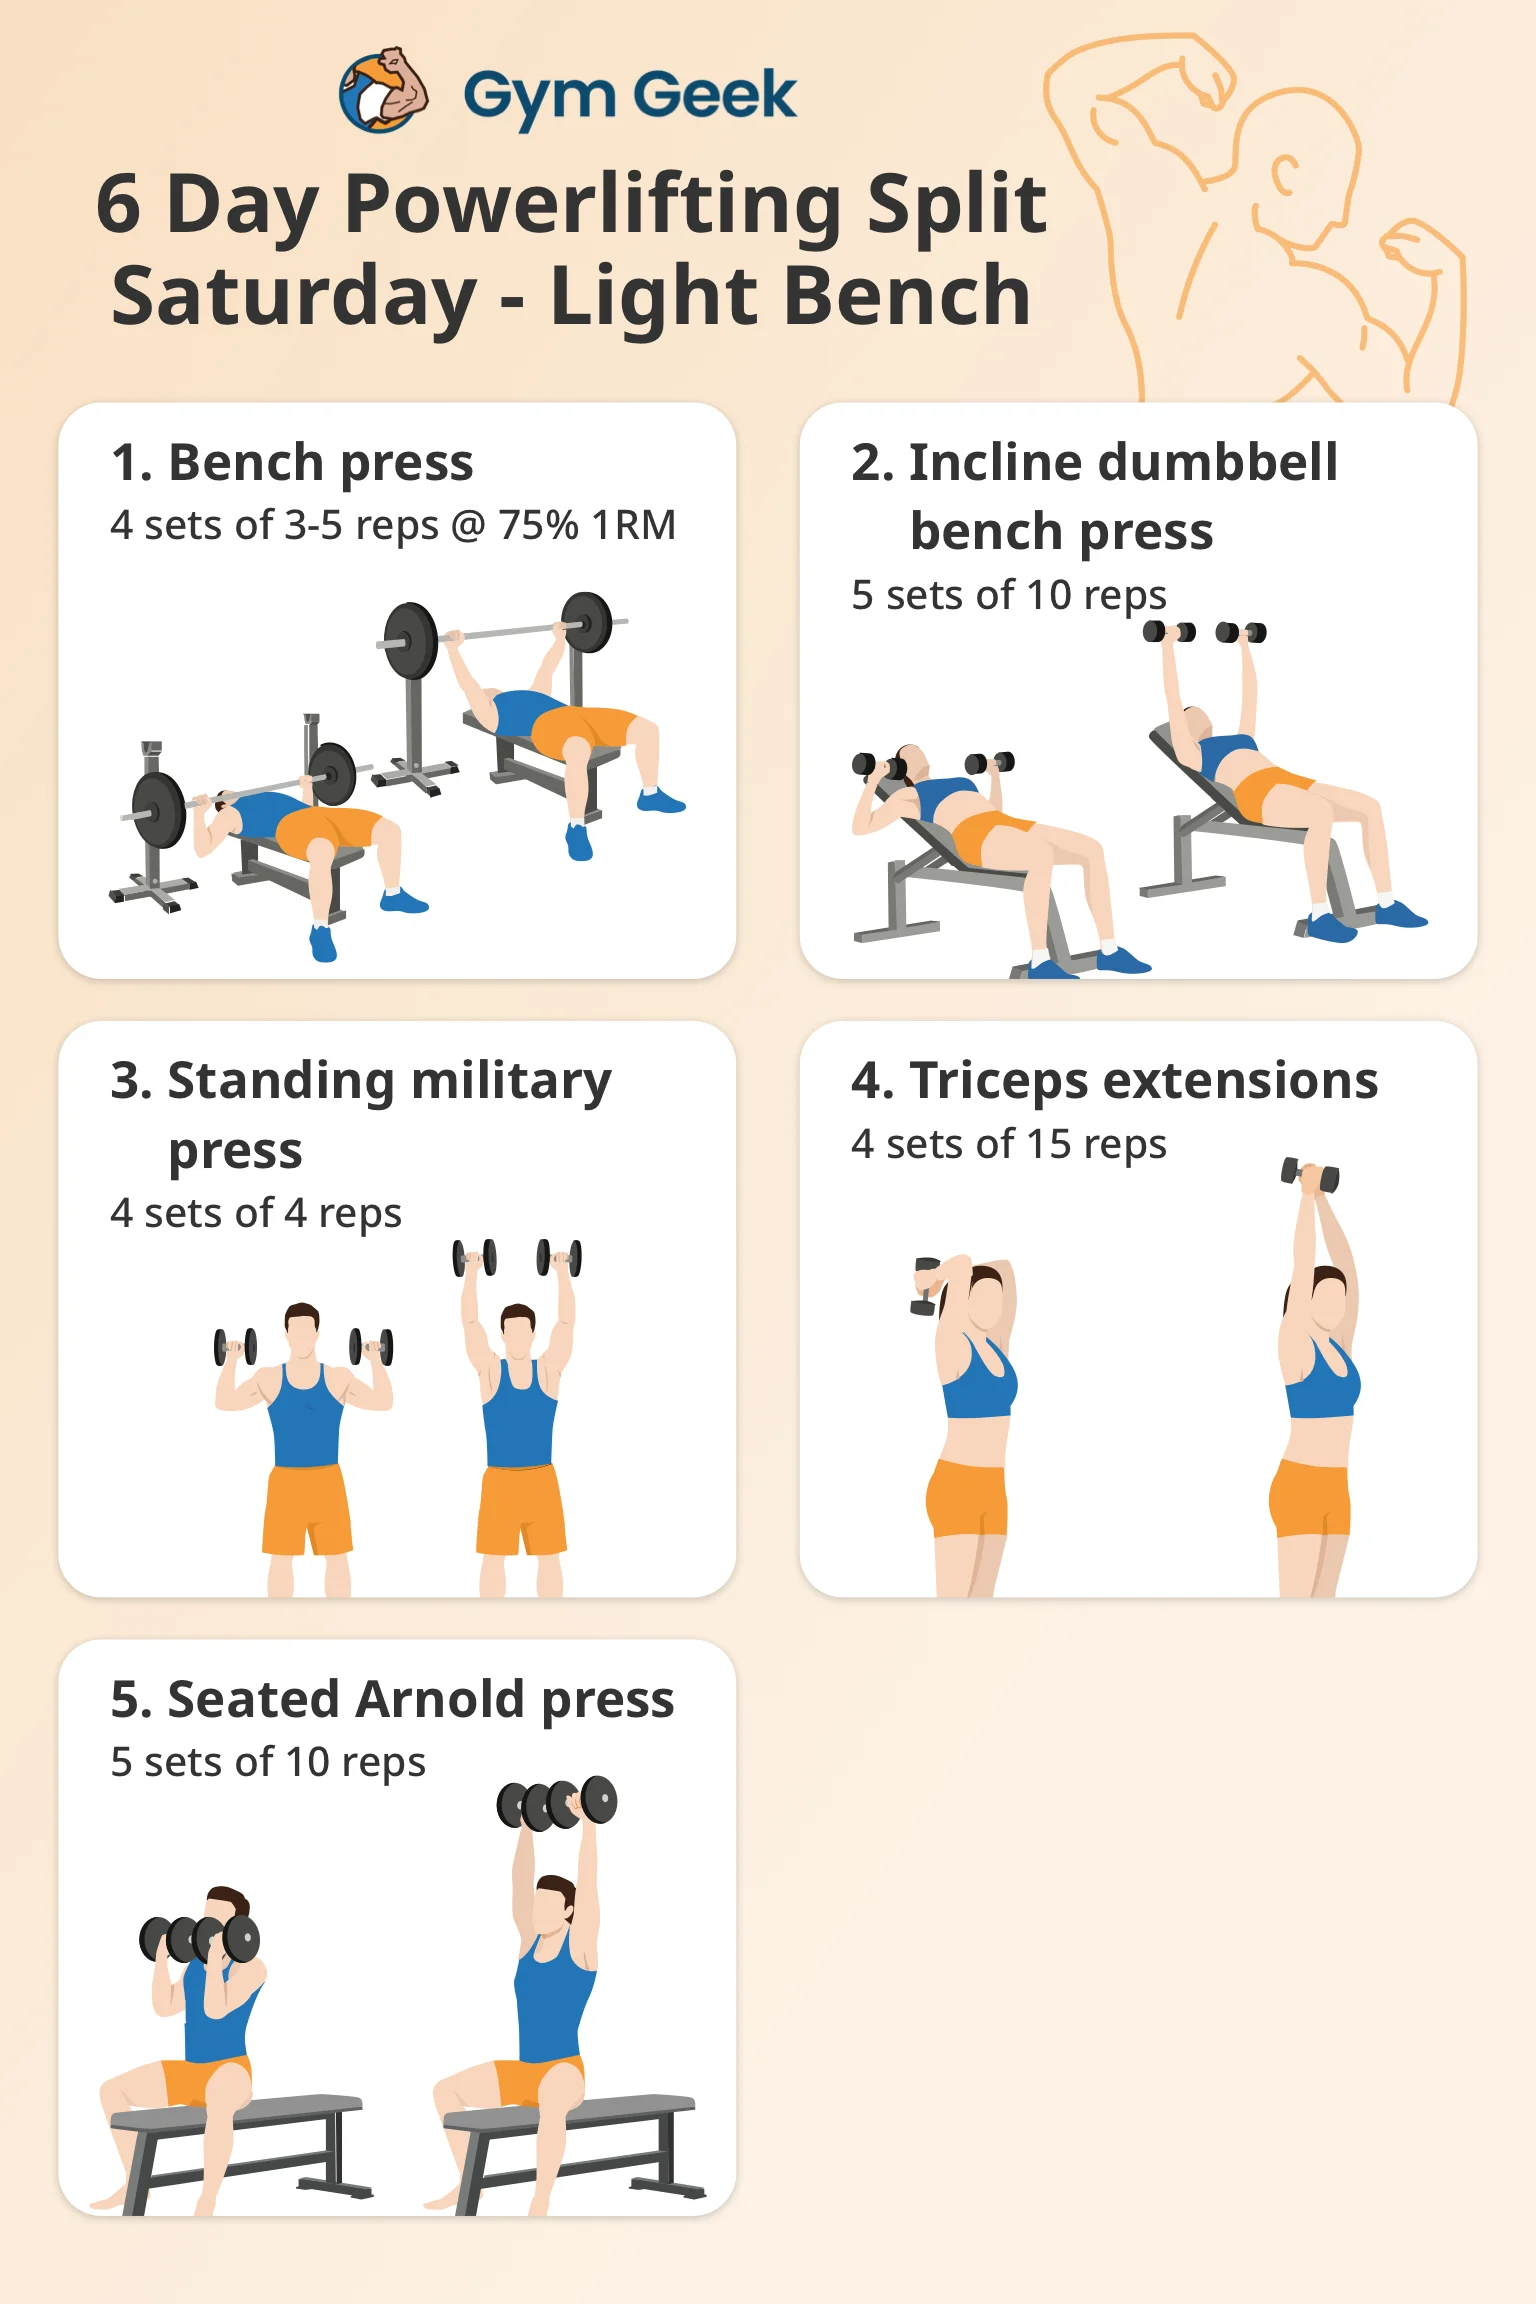 infographic - 6 day powerlifting program - Saturday - Light Bench